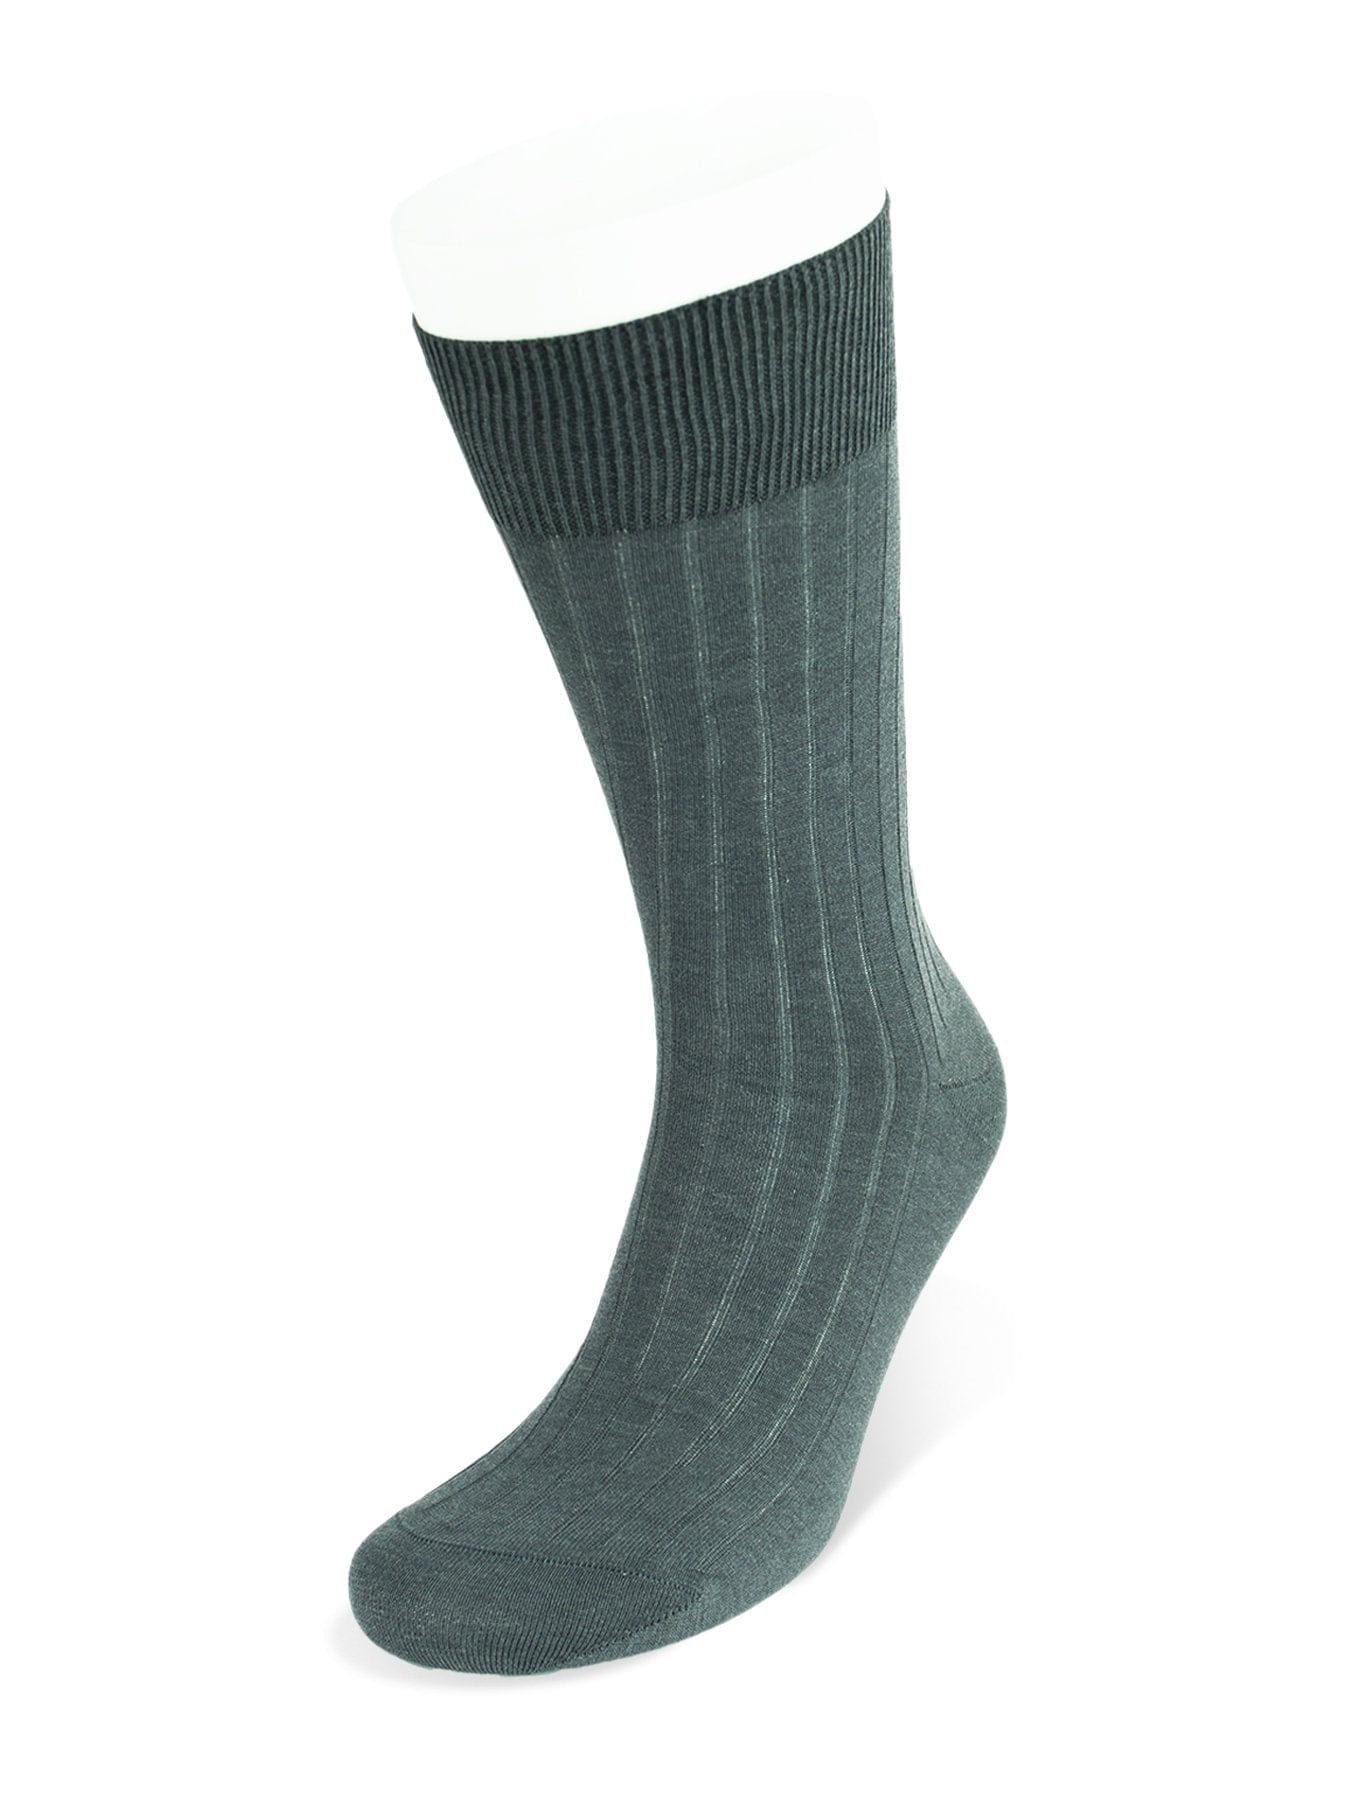 Short Plain Dark Grey Cotton Socks